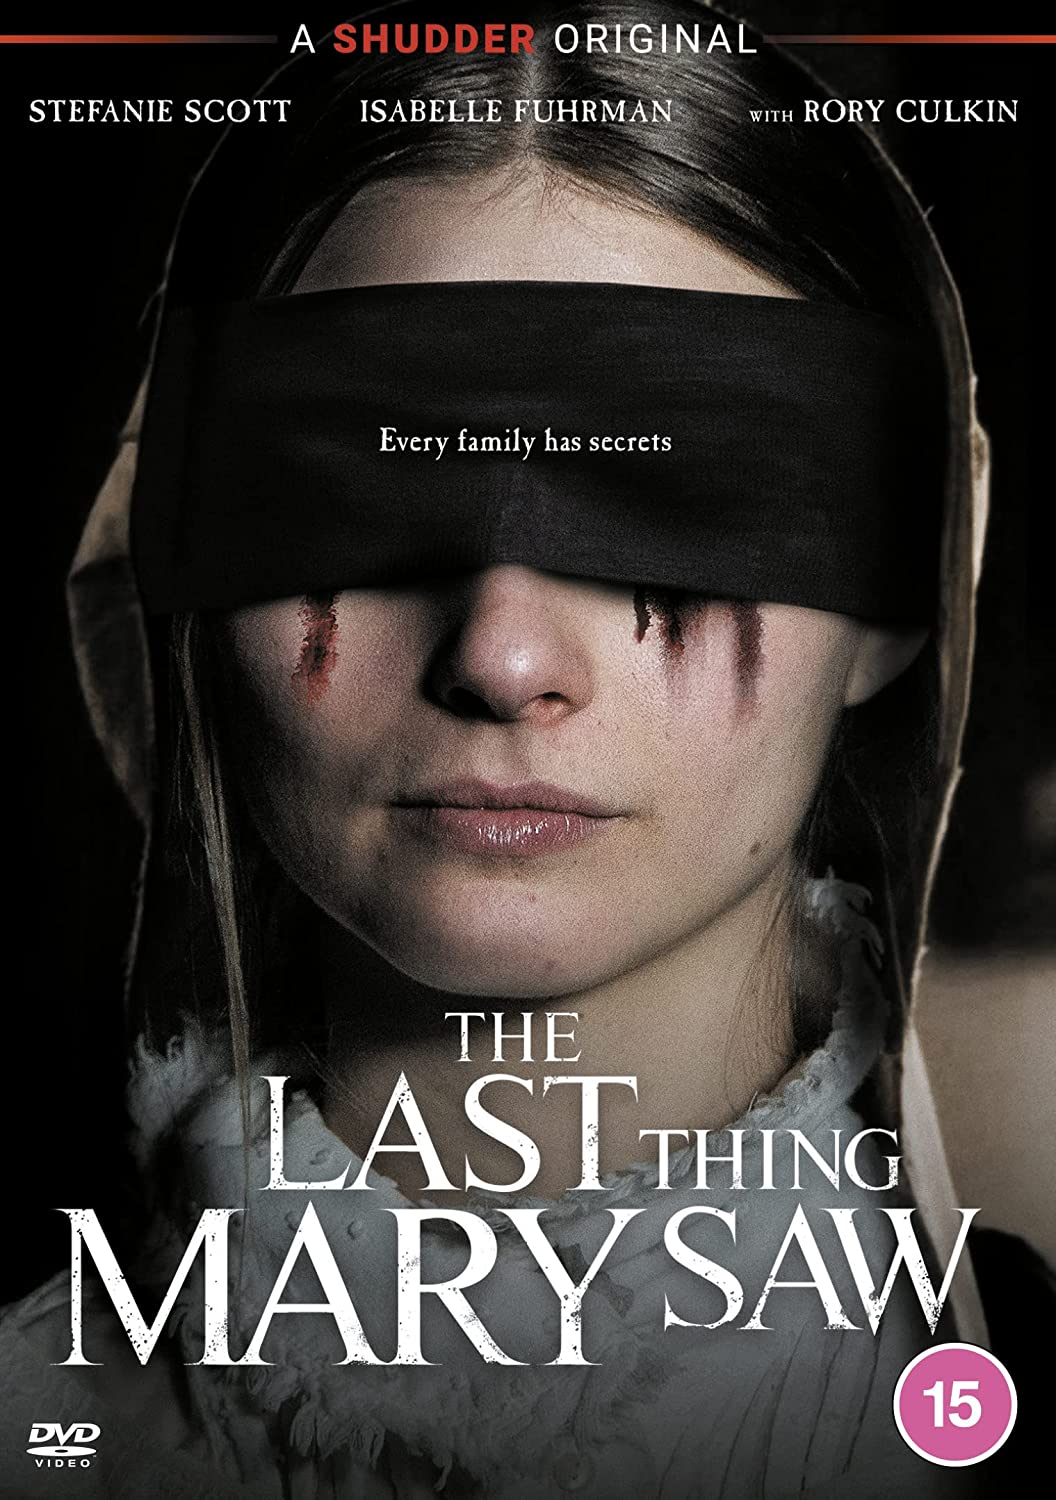 Gagnez l'original de Shudder "The Last Thing Mary Saw" en DVD 3